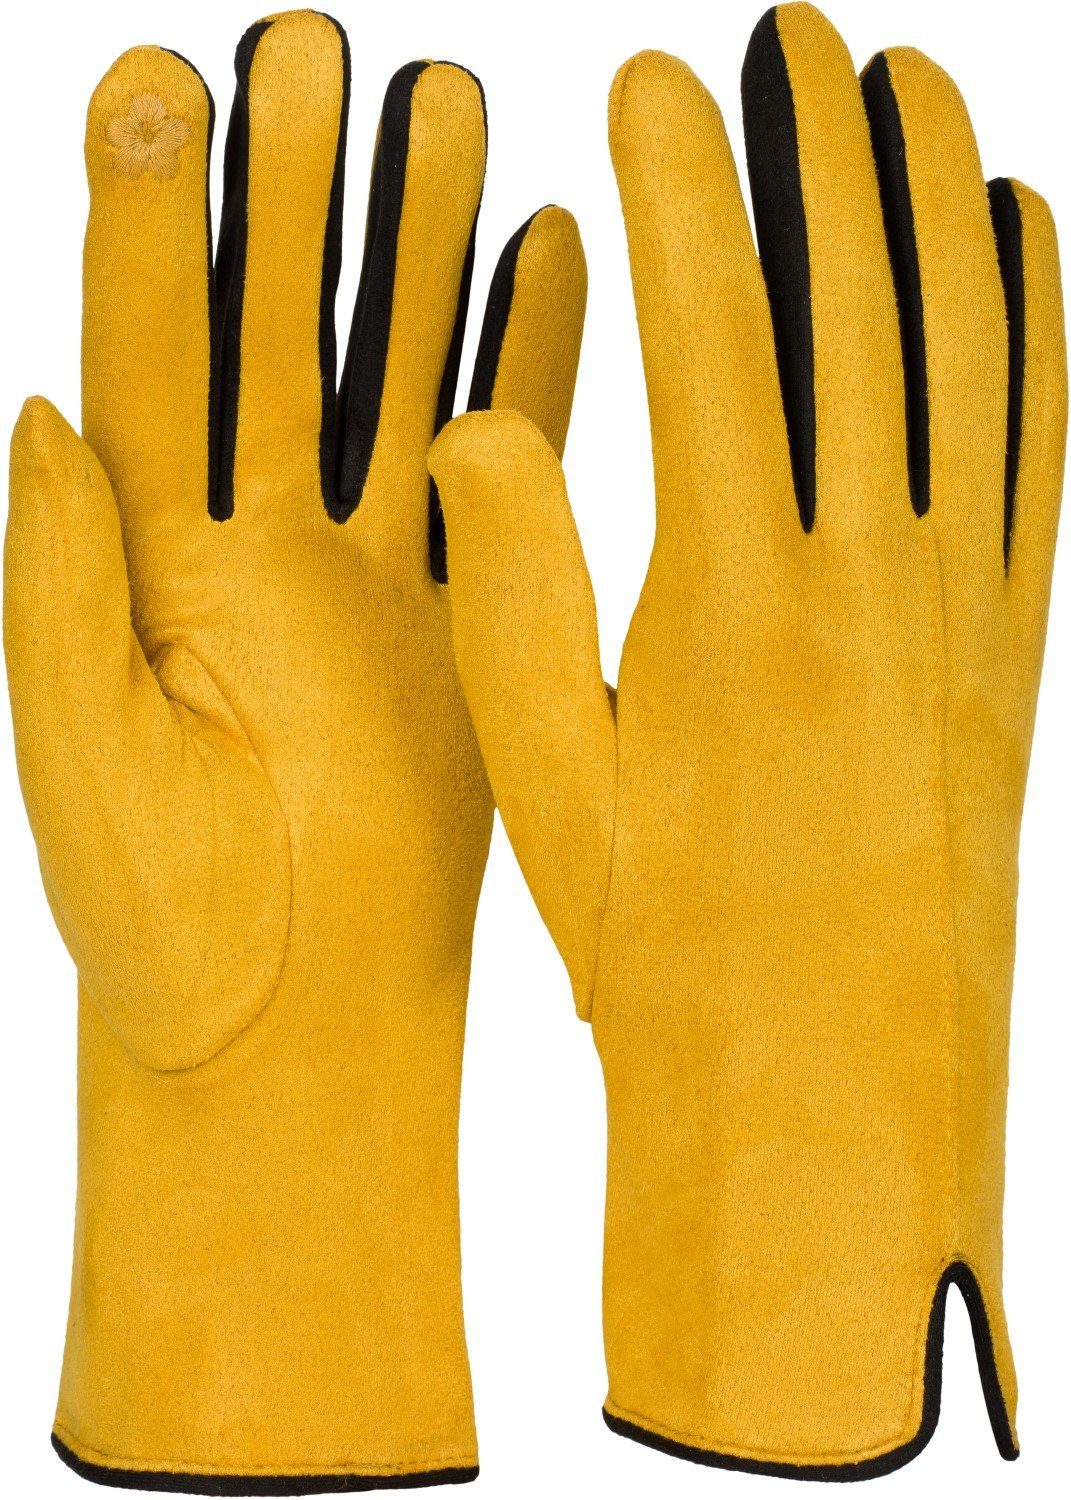 styleBREAKER Fleecehandschuhe Touchscreen Handschuhe Kontrast Curry